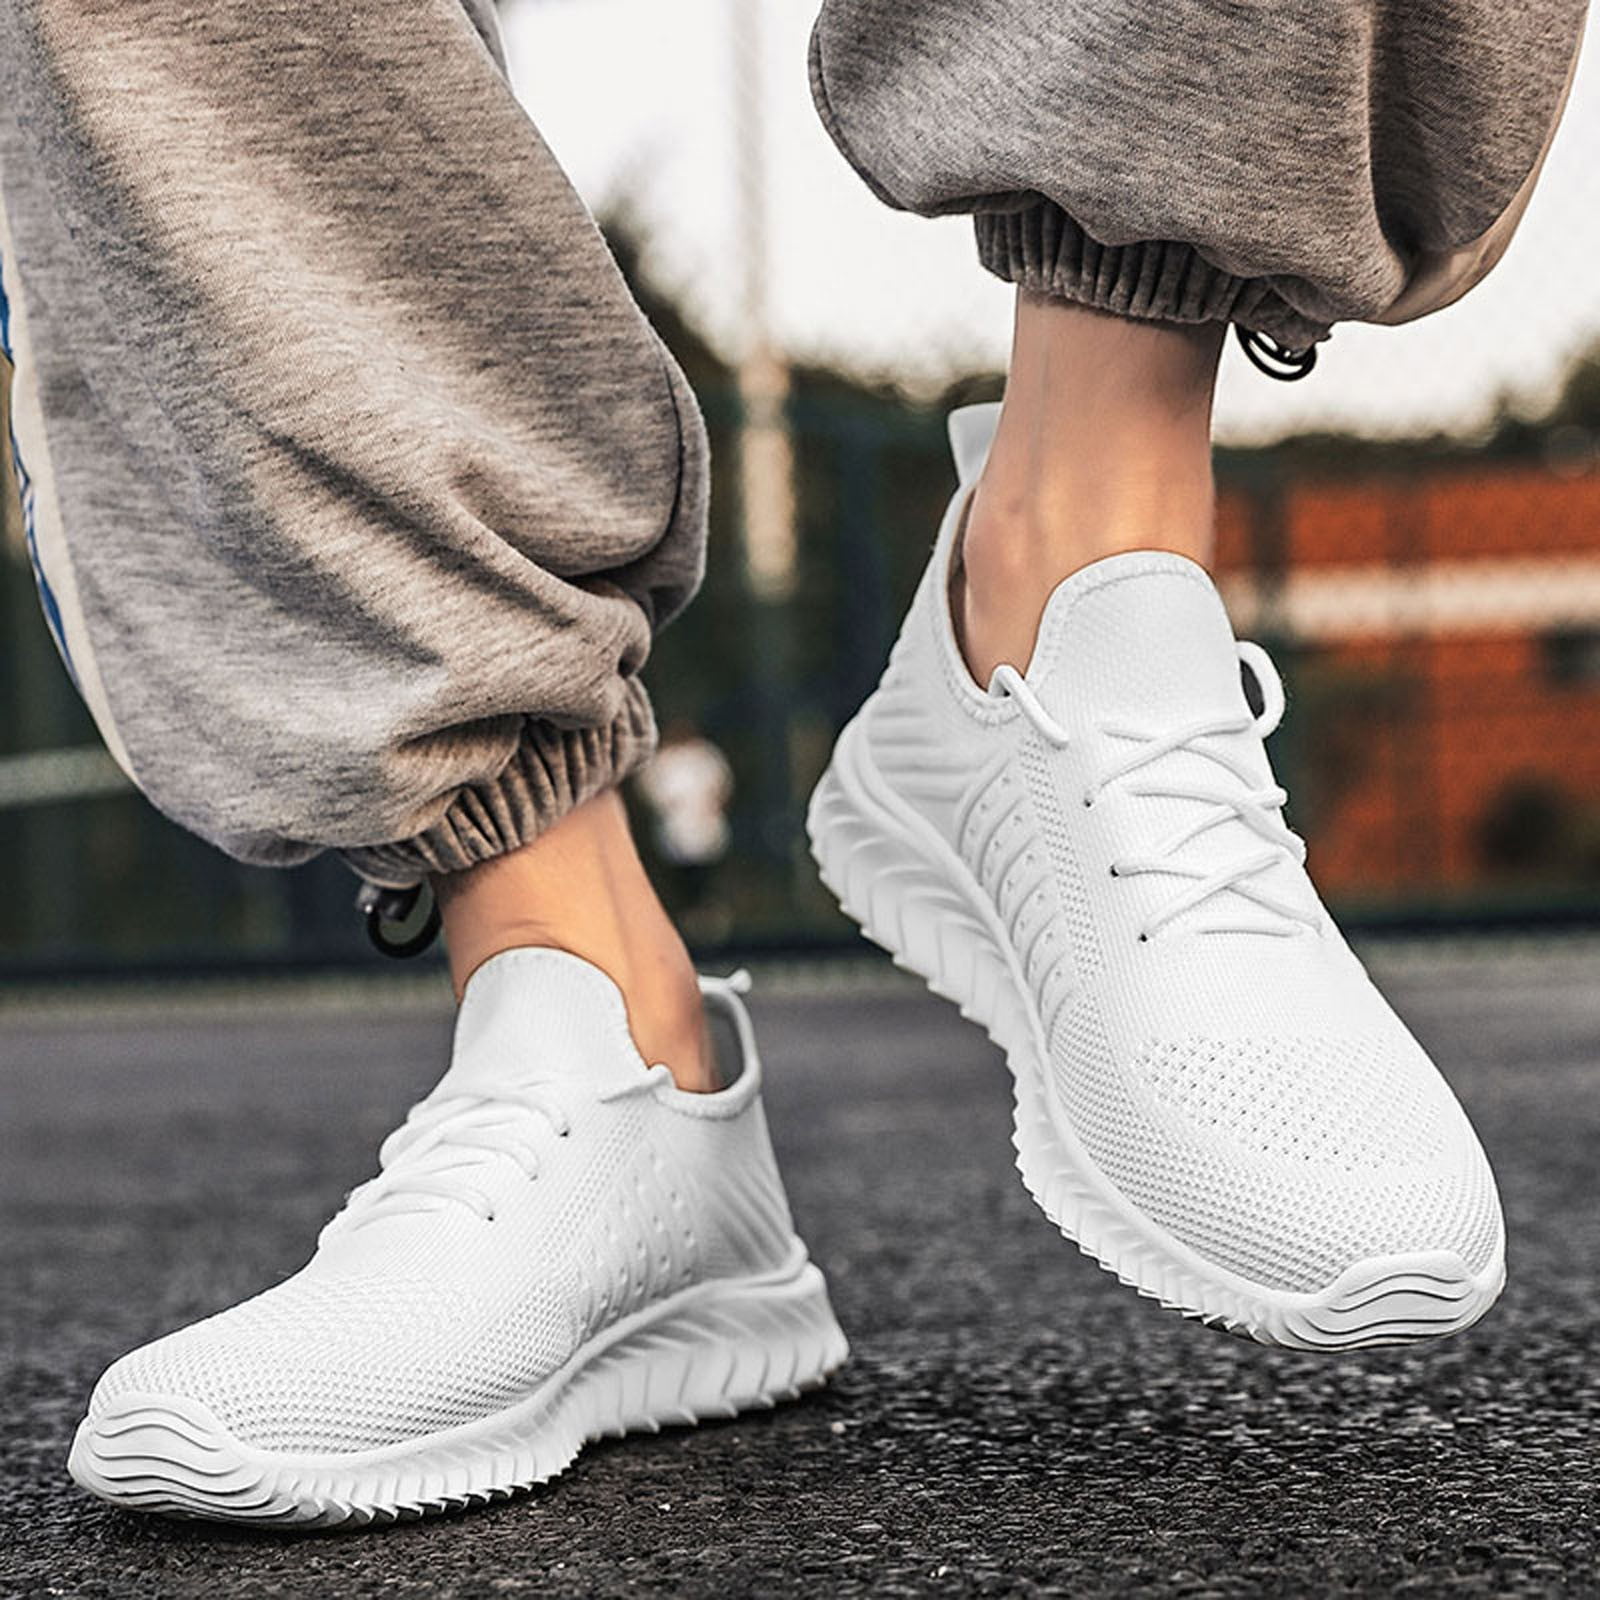 Nike Air Vapor Max White Glitter Running Athleisure Sneakers Size 9.5 | eBay